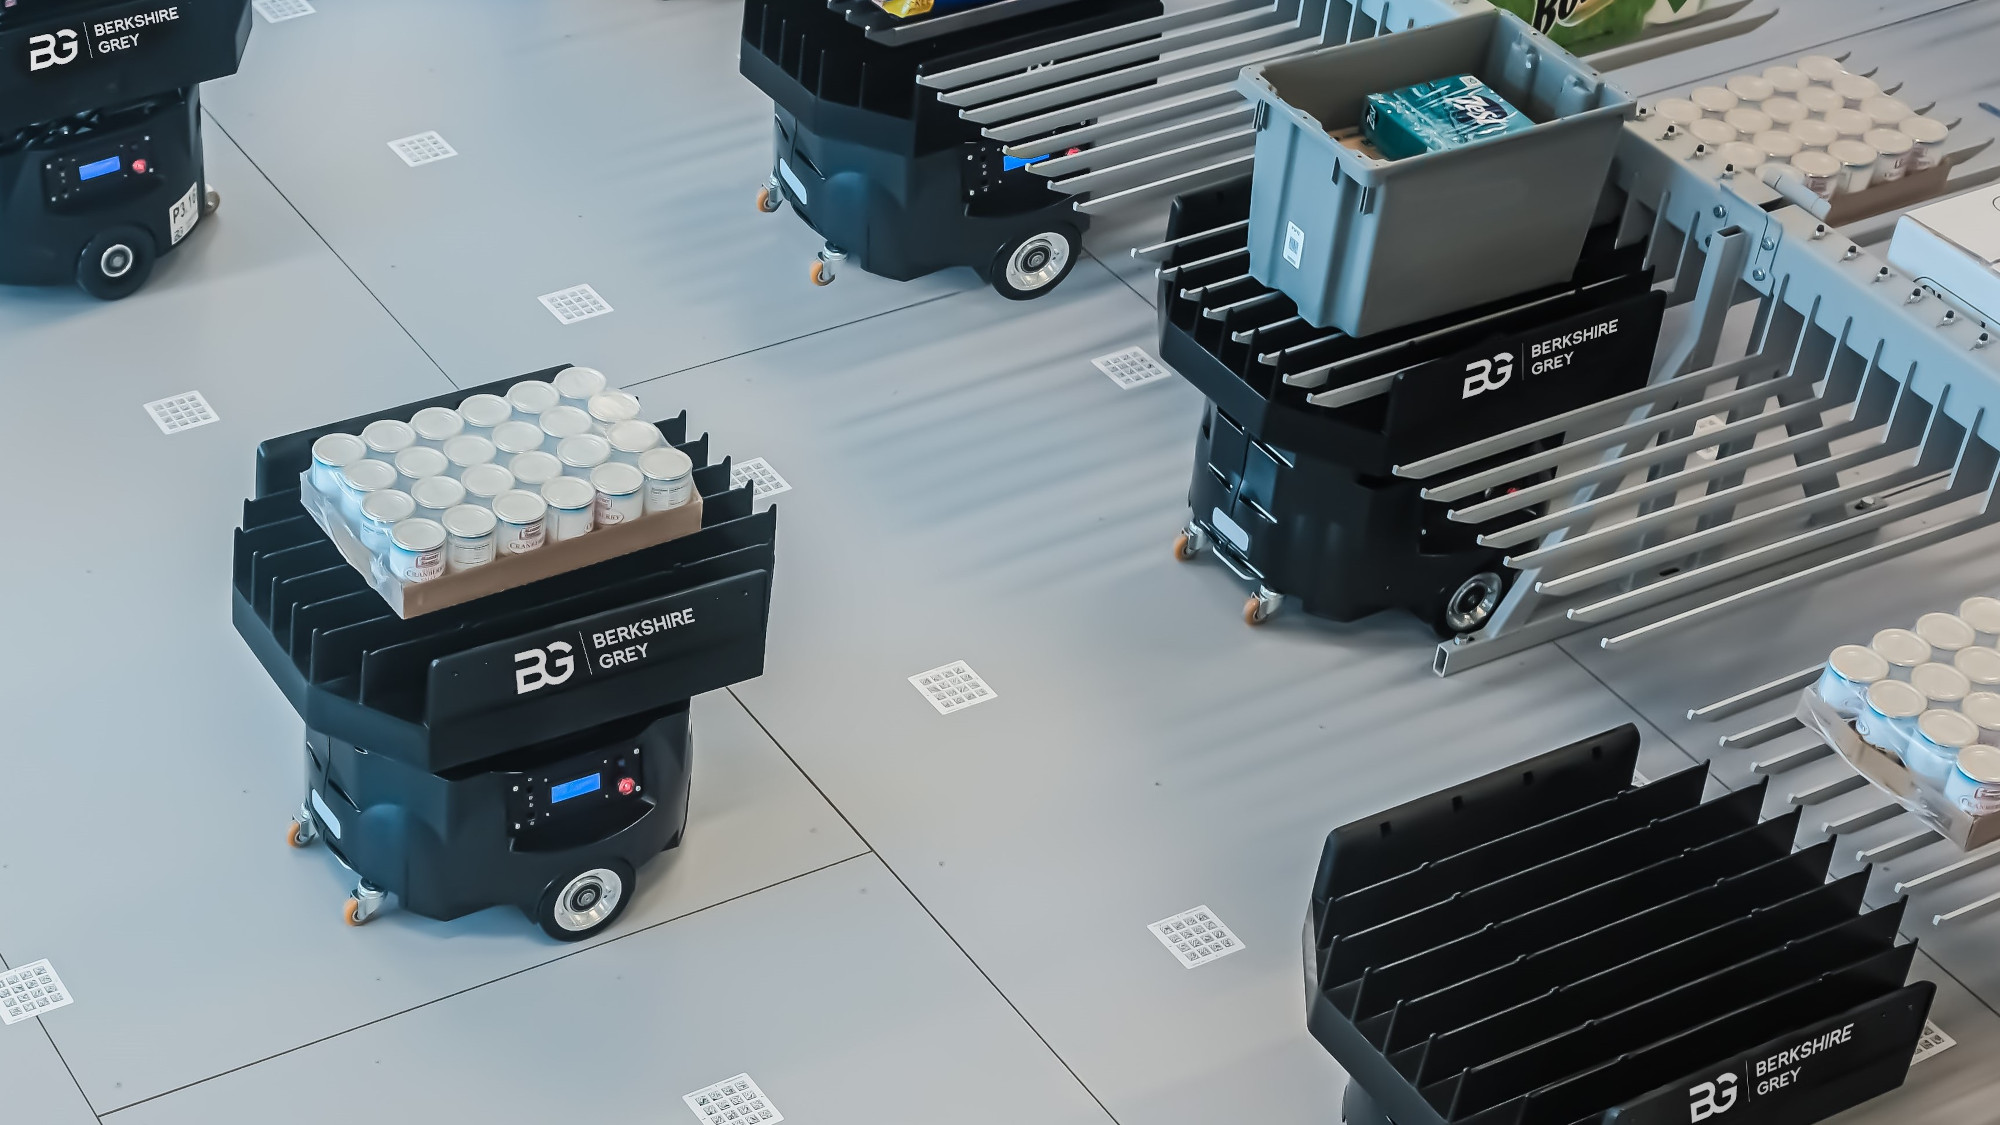 Berkshire Grey releases robotics for warehouse e-commerce fulfillment